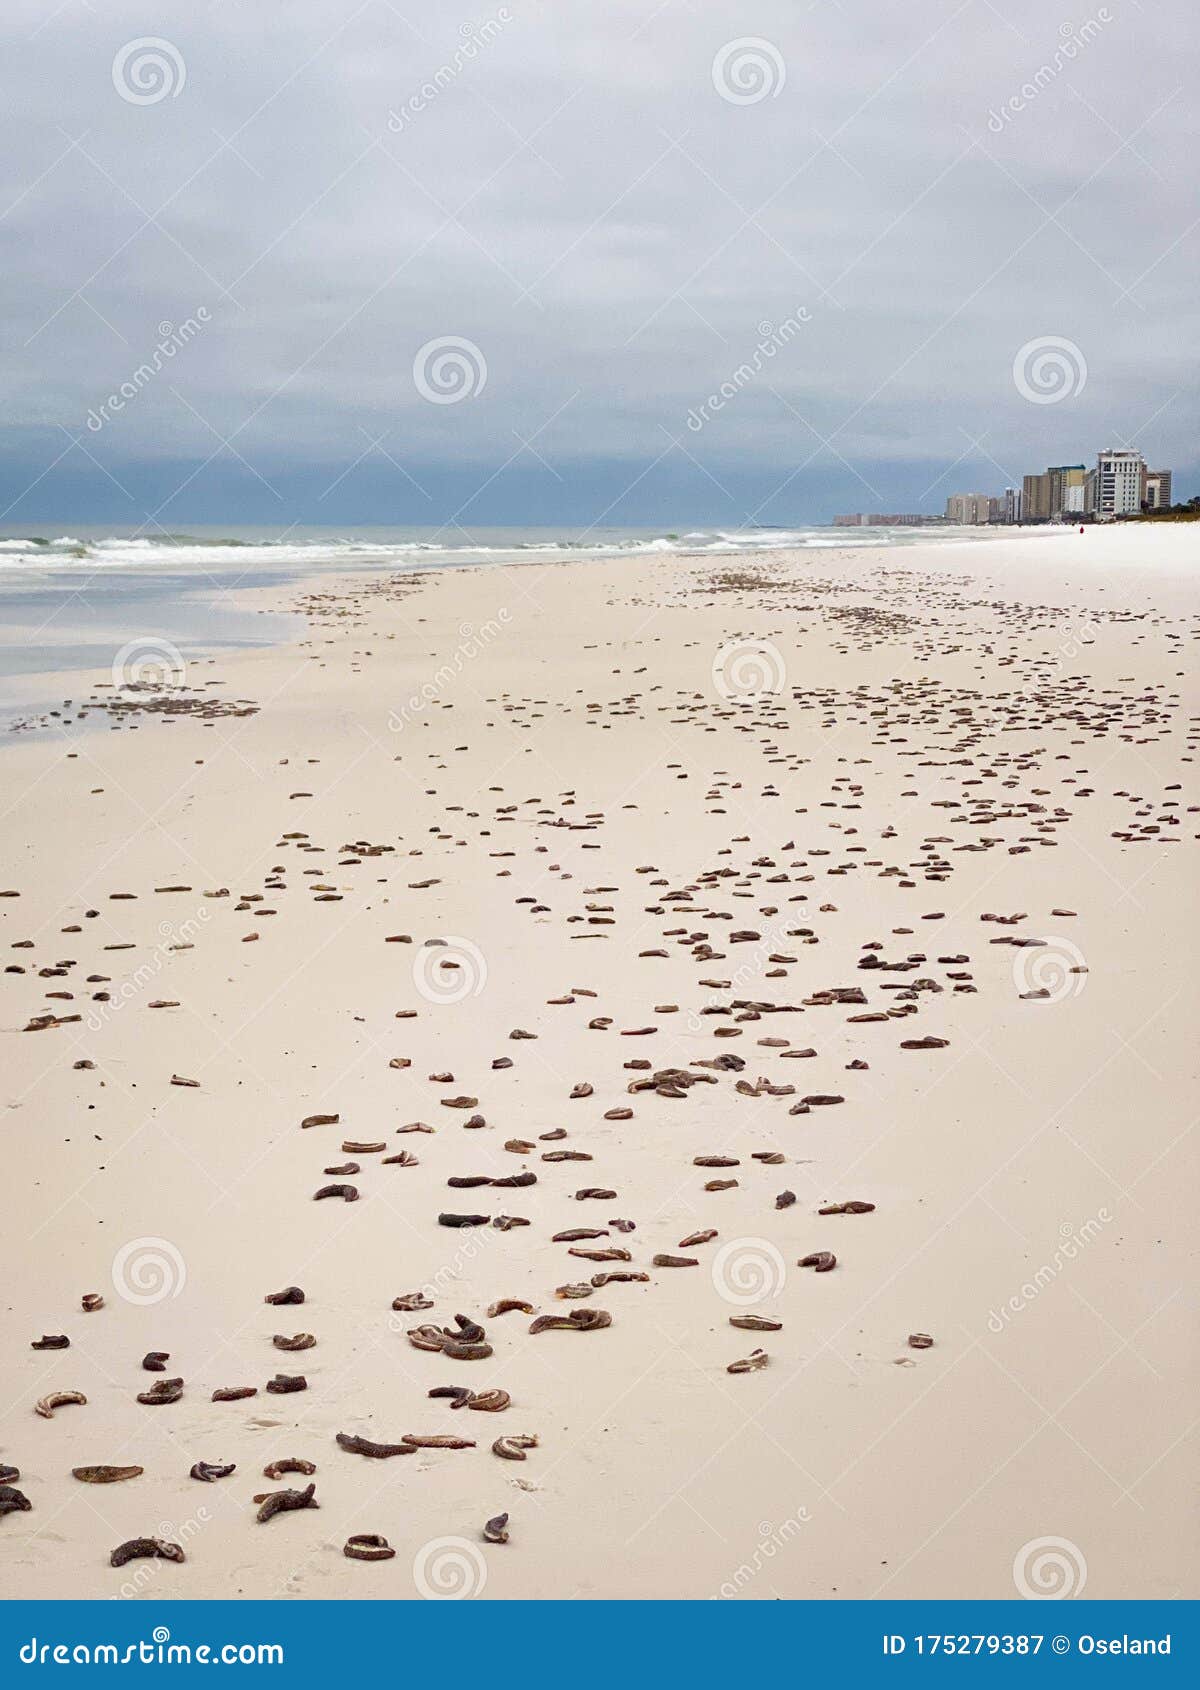 thousands of sea cucumbers on destin, florida beach.